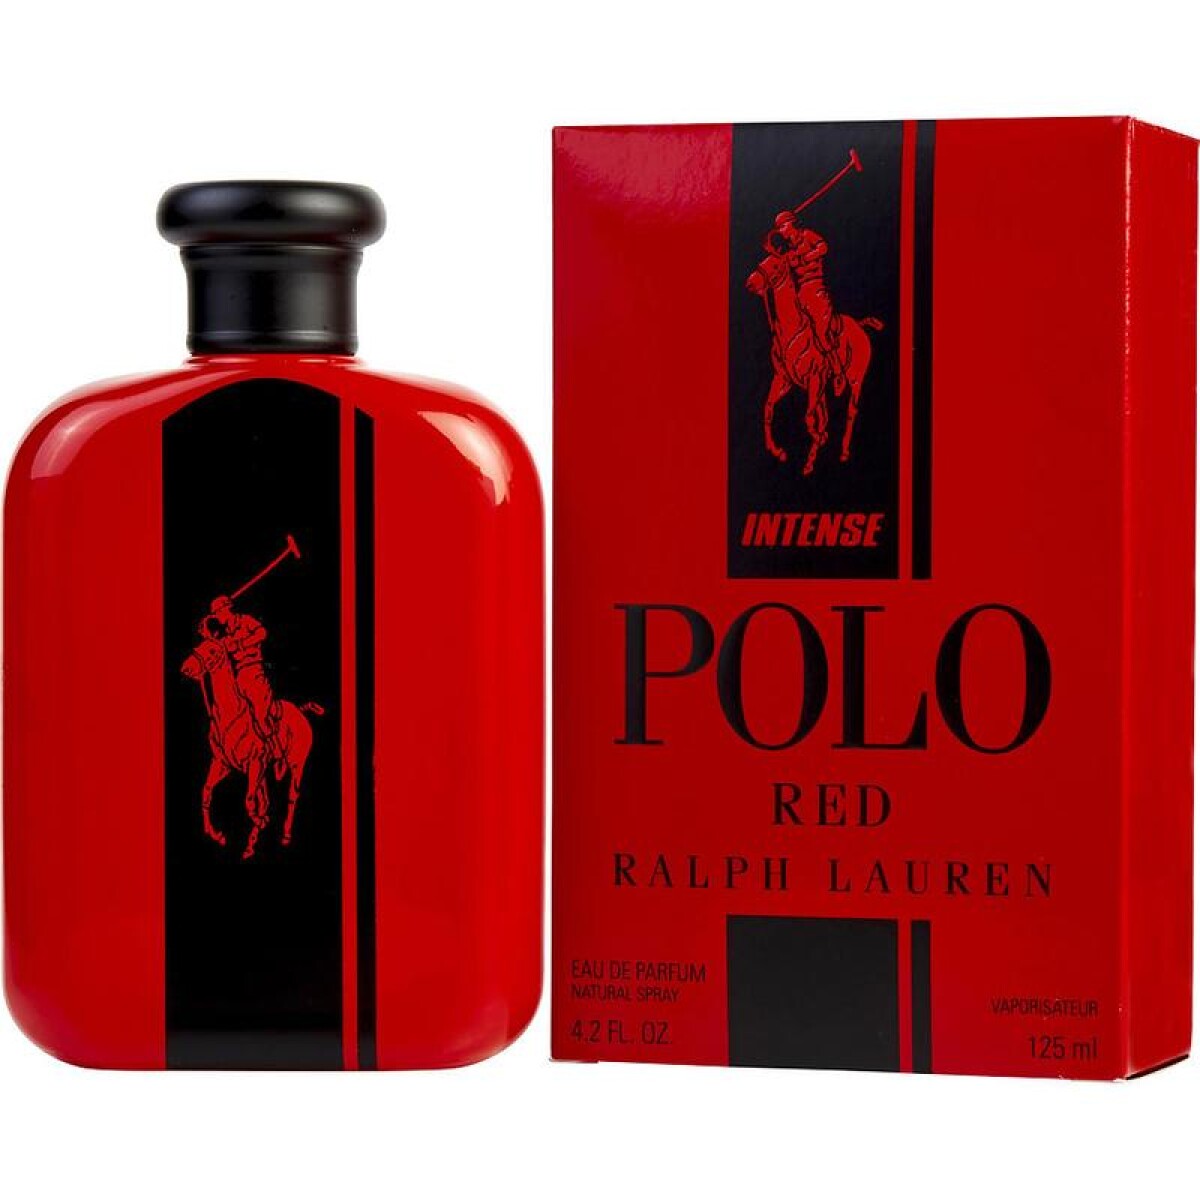 Polo Red Intense Perfume Ralph Lauren - 40ml 